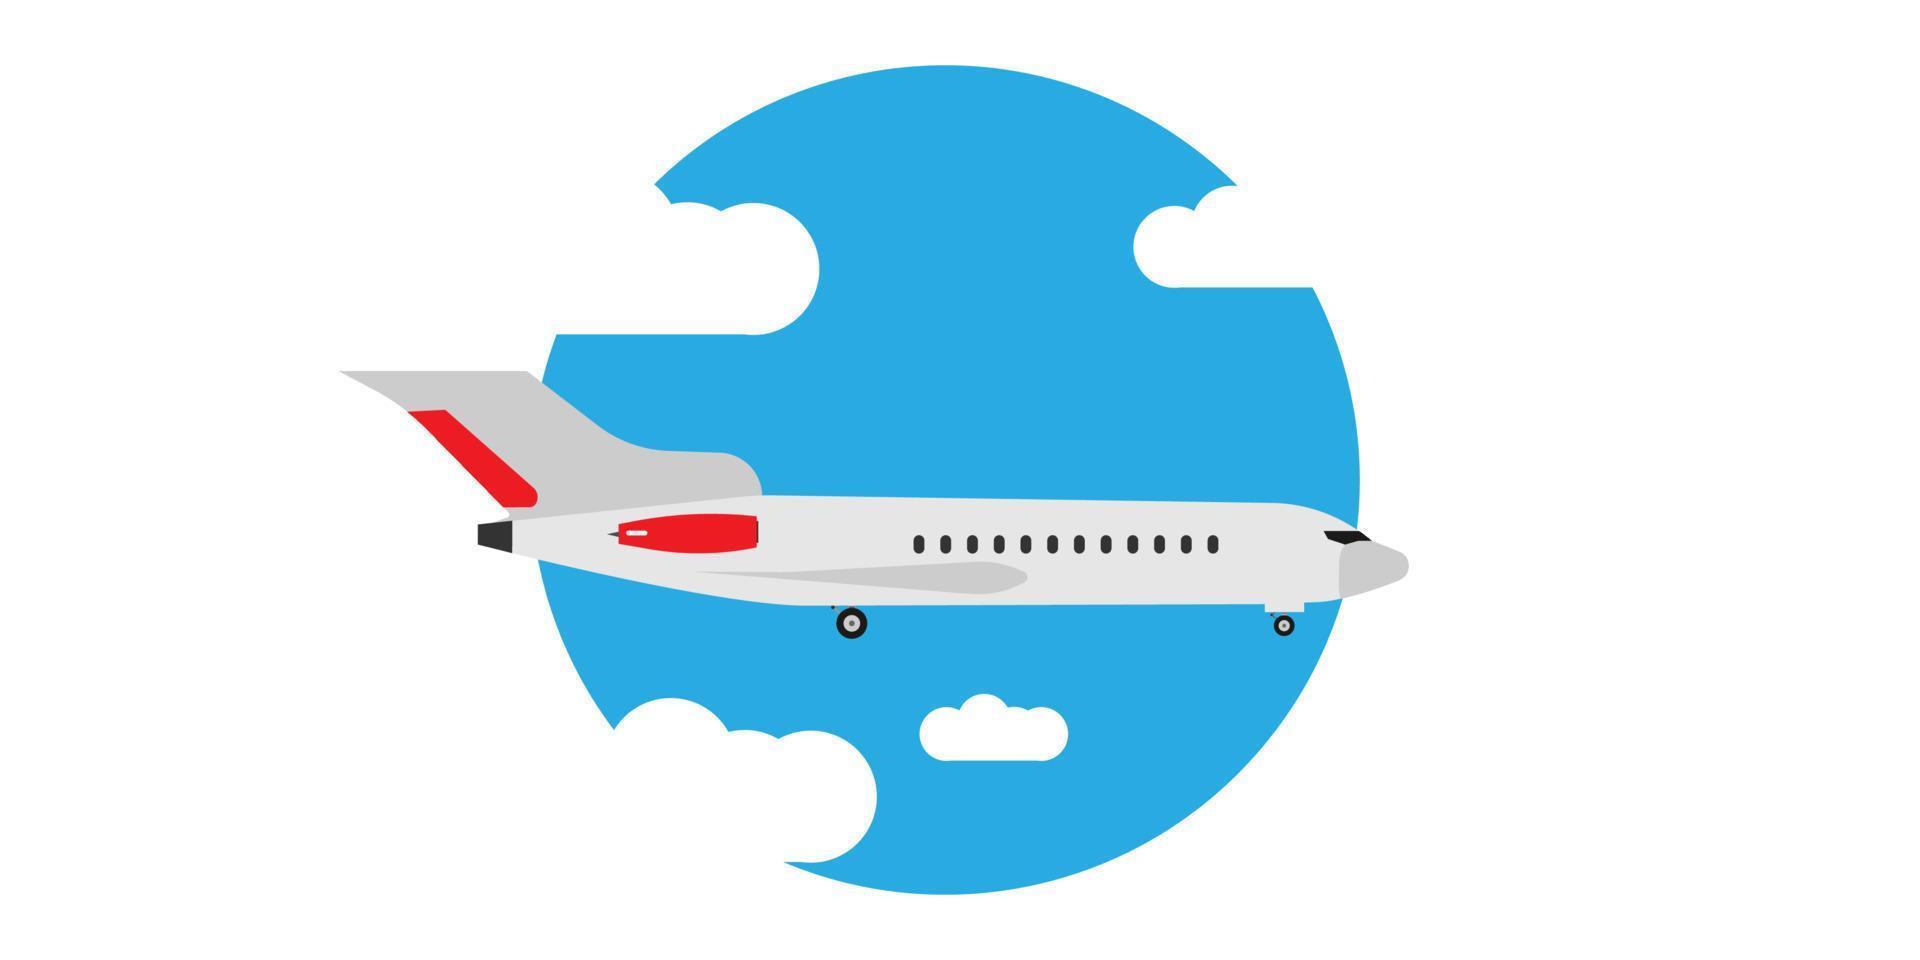 vliegtuig vliegen in wolk hemel illustratie banner concept. reizen toerisme jet richting vakantie flat. cartoon commerciële personenauto vector